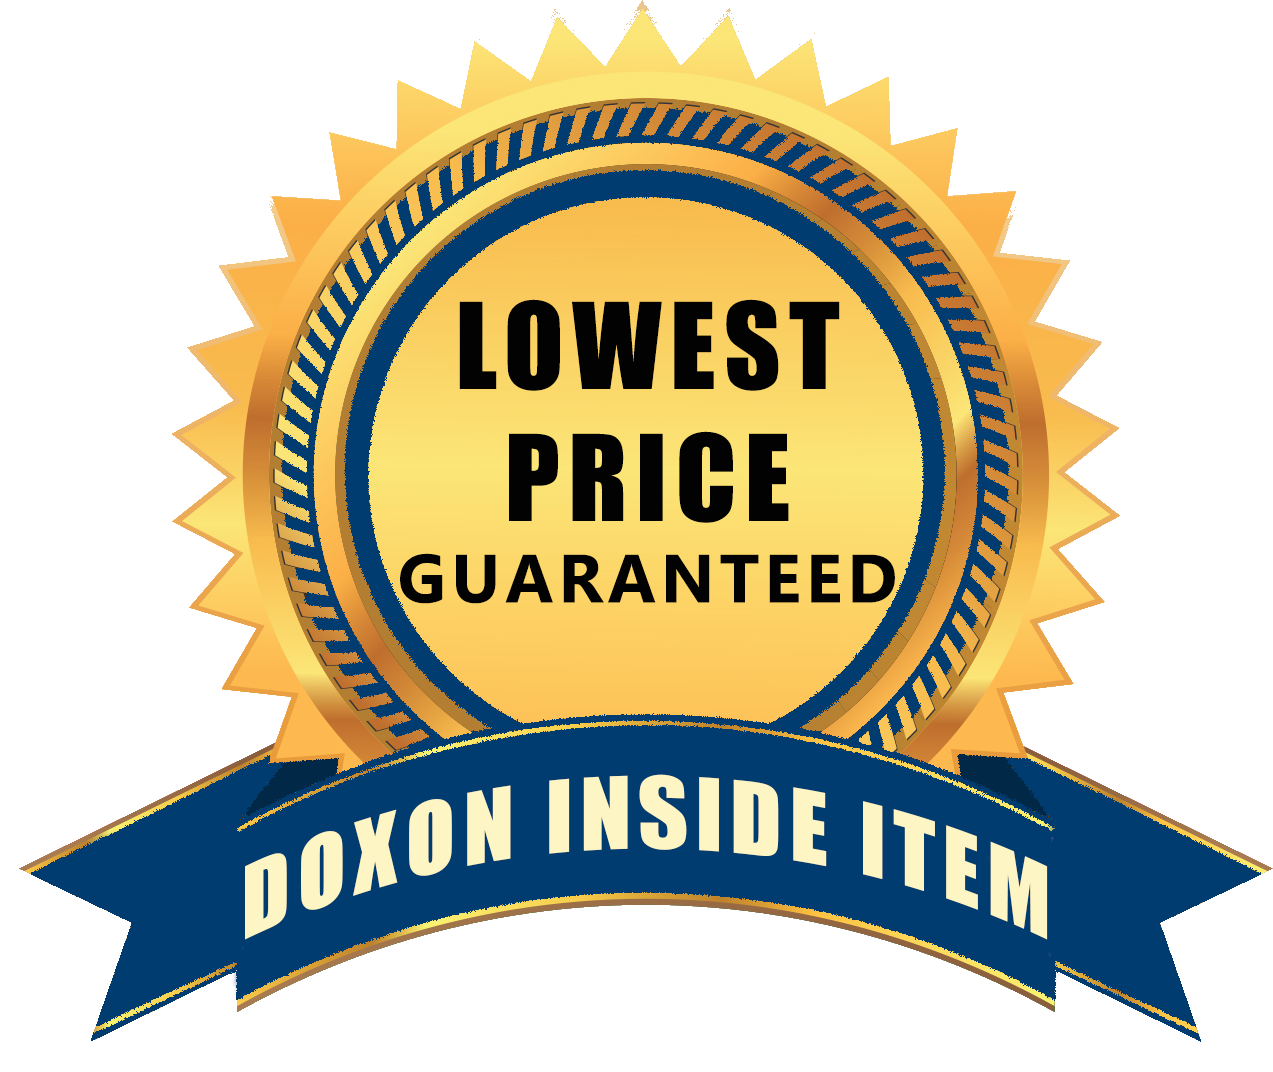 Doxon inside item